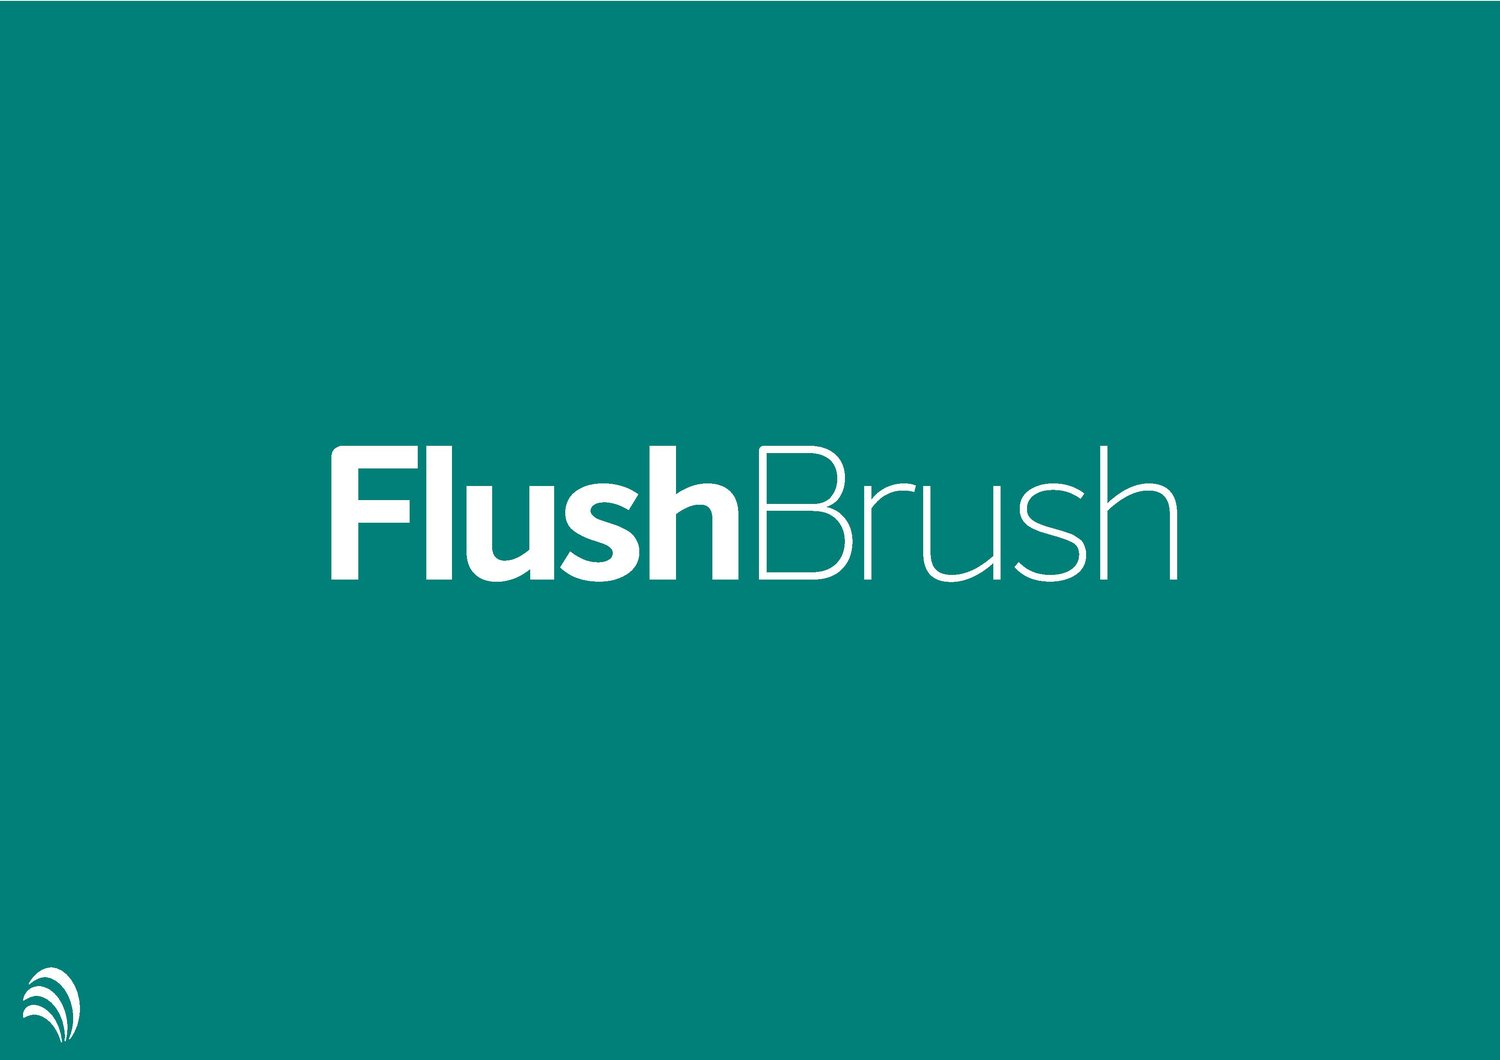 www.flushbrush.co.uk